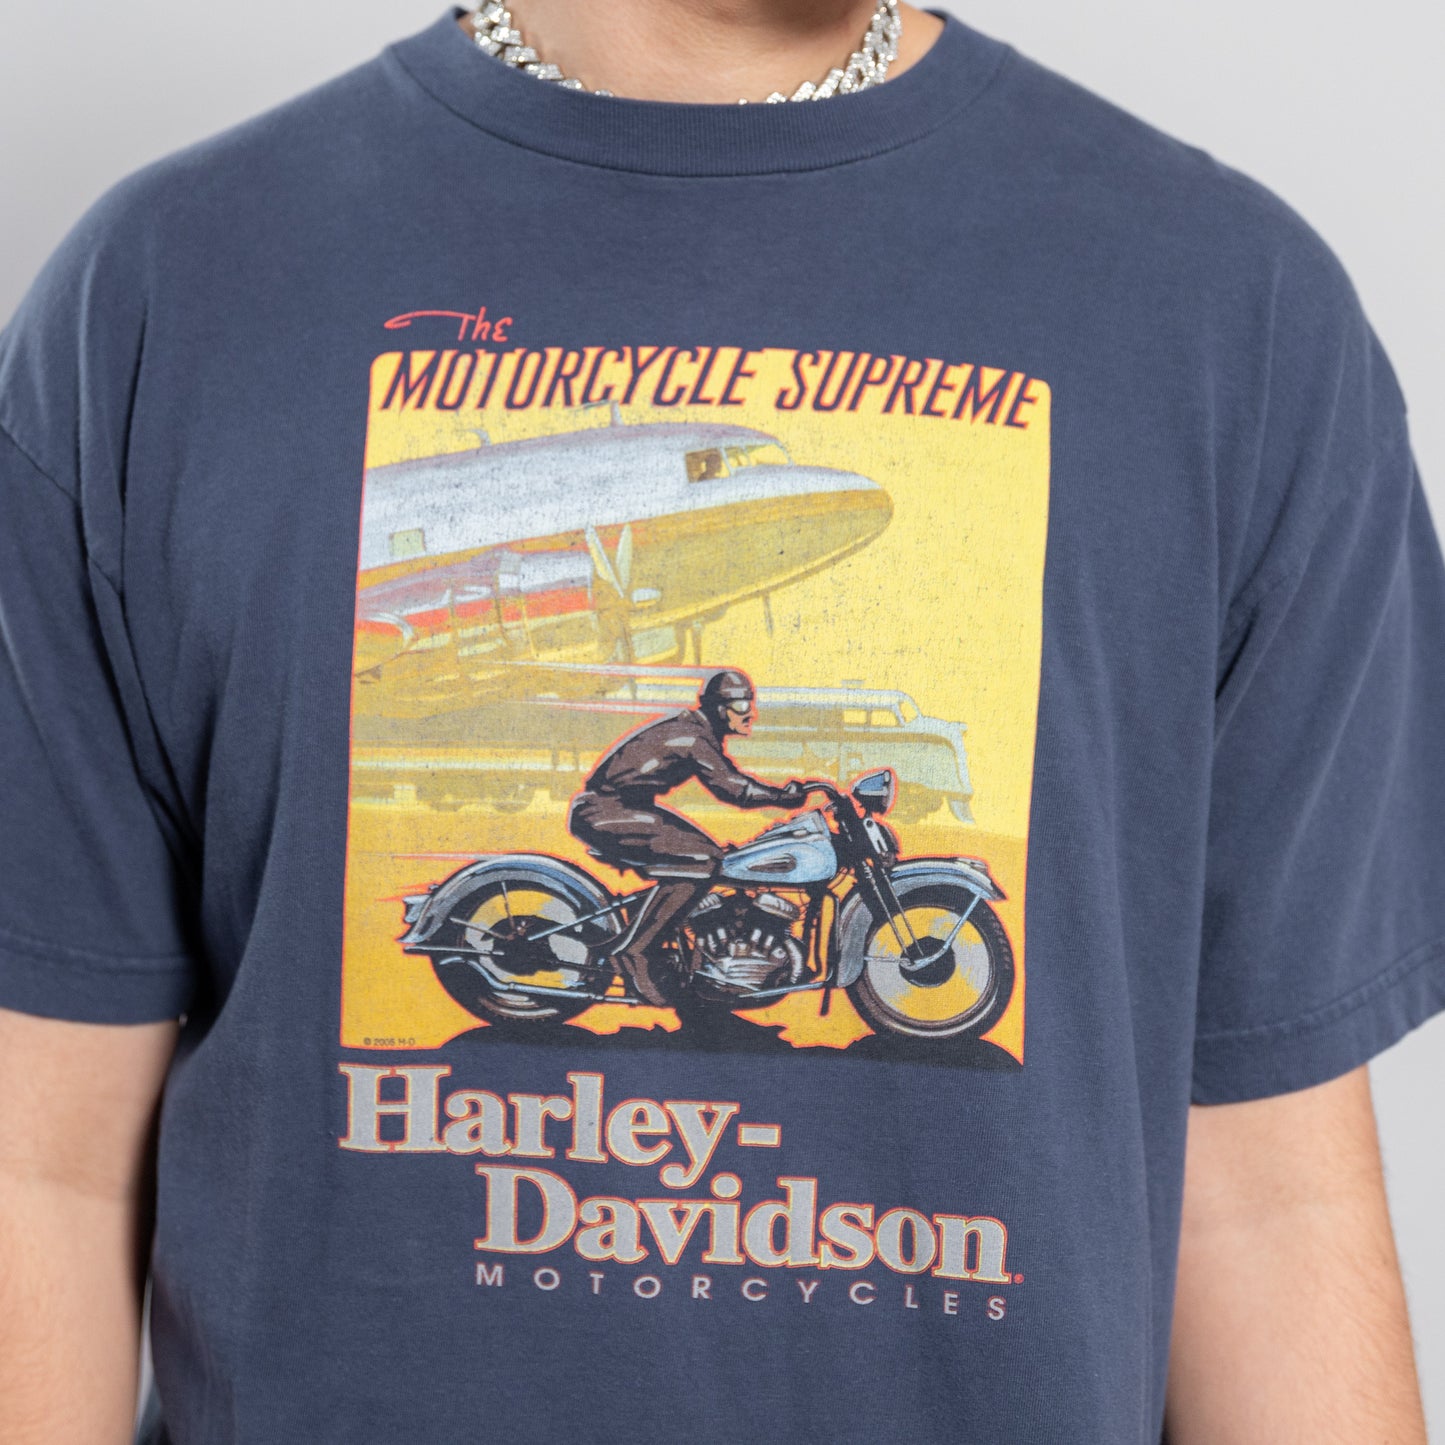 2005 Harley Davidson The Motorcycle Supreme Biker Tee